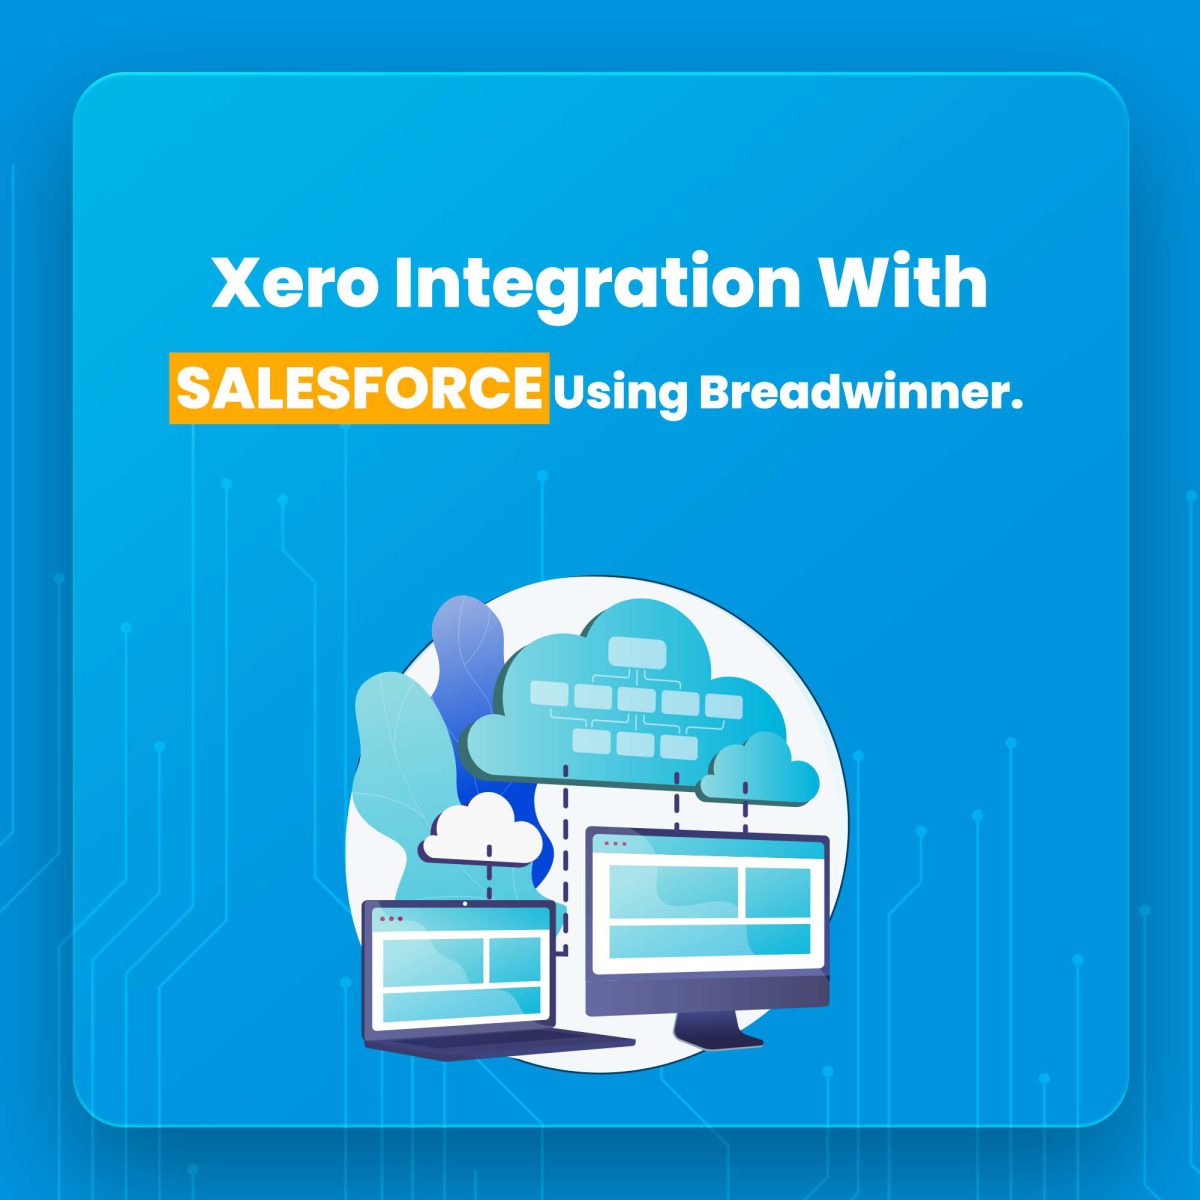 Xero Integration With Salesforce Using Breadwinner